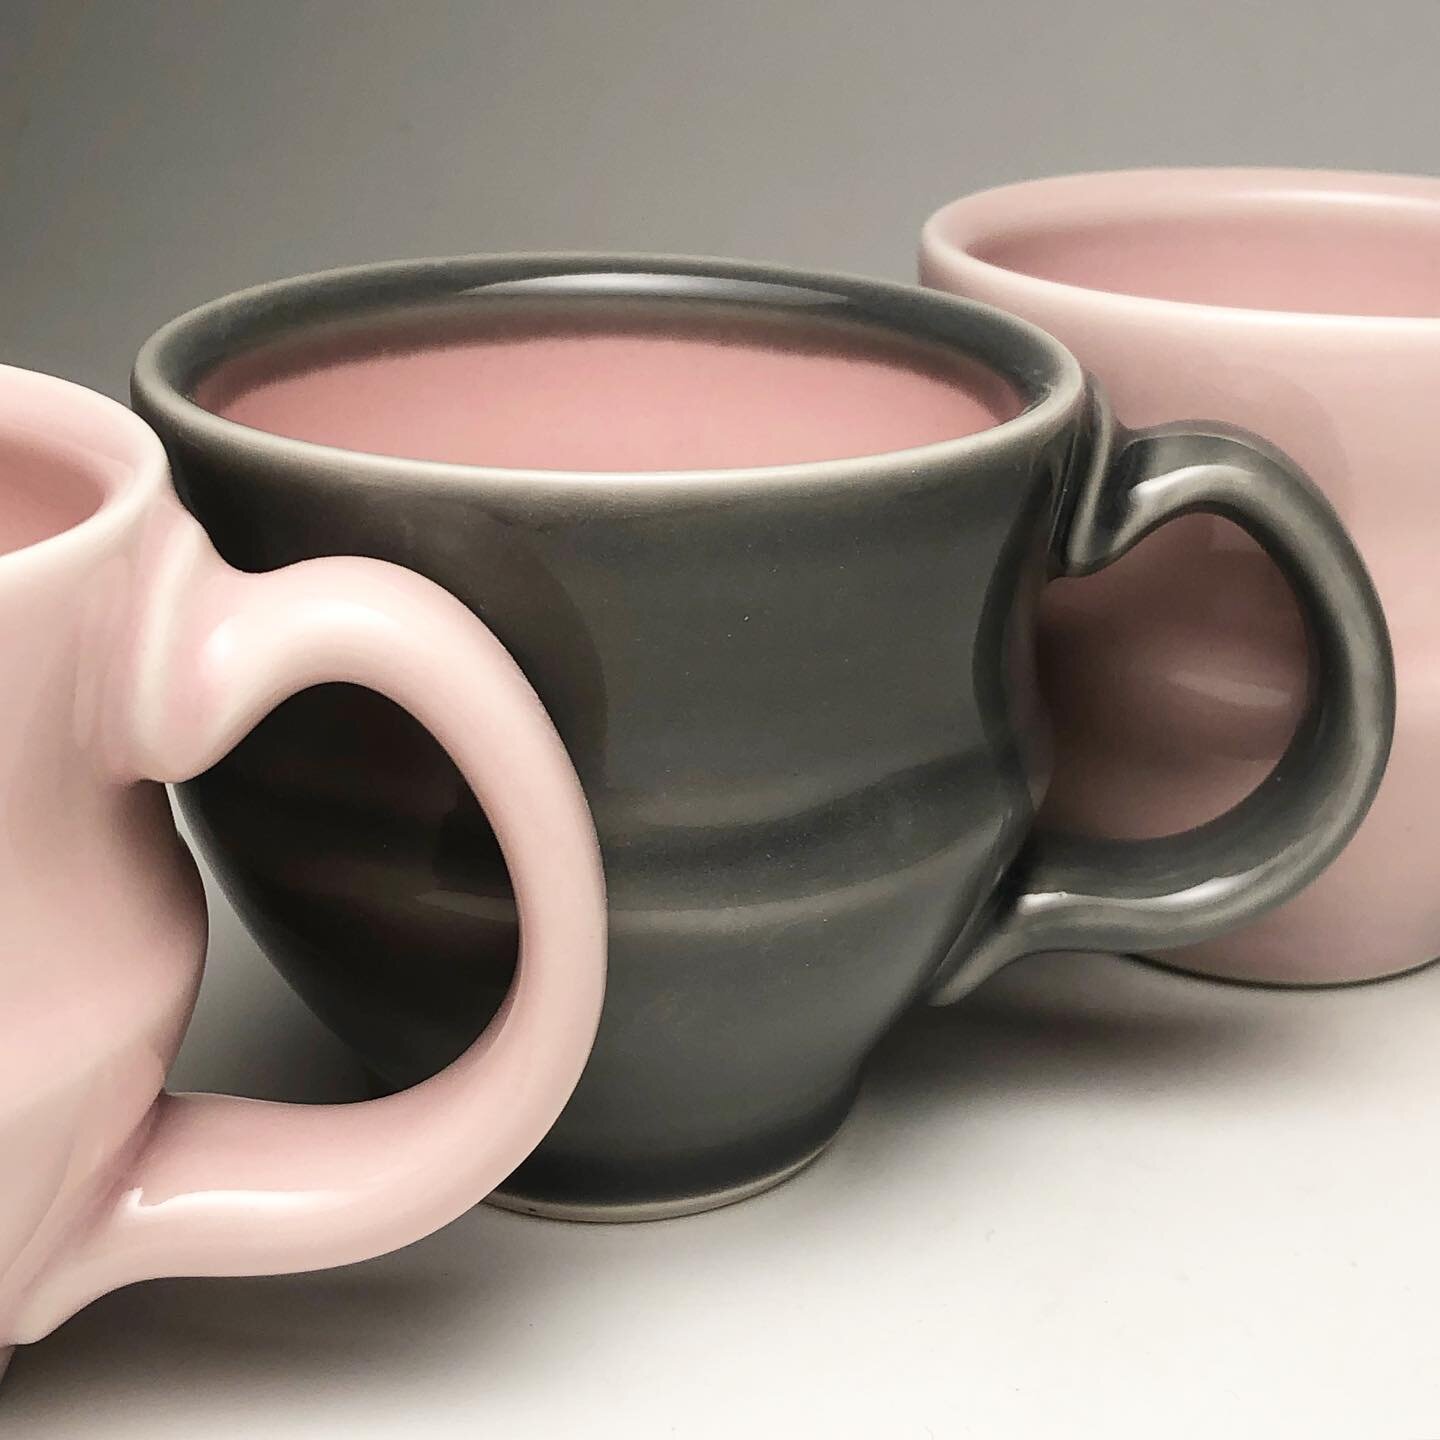 Website Shop Update.. 
New Mugs just listed..
https://ryanjgreenheck.com/shop
&bull;
https://www.etsy.com/shop/Ryanjgreenheck
&bull; 
#mug #mugs #mugsmith #handledcup #coffeemug #teamug #wheelthrown #pottery #porcelain #ceramics #ceramic #ceramicstud